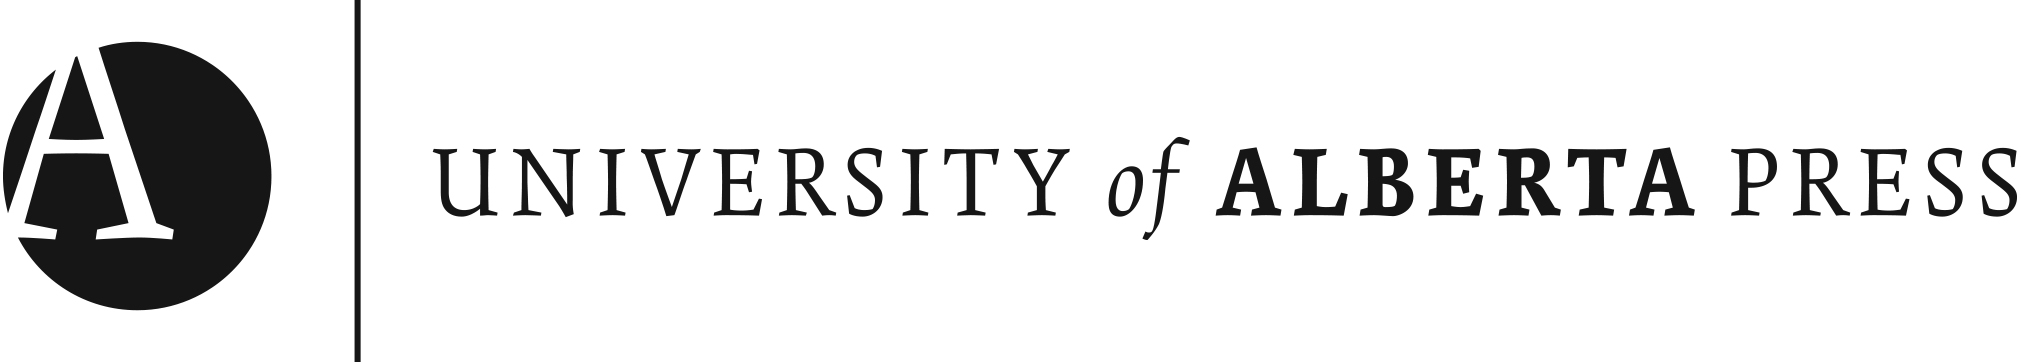 University of Alberta Press logo / Logo du University of Alberta Press